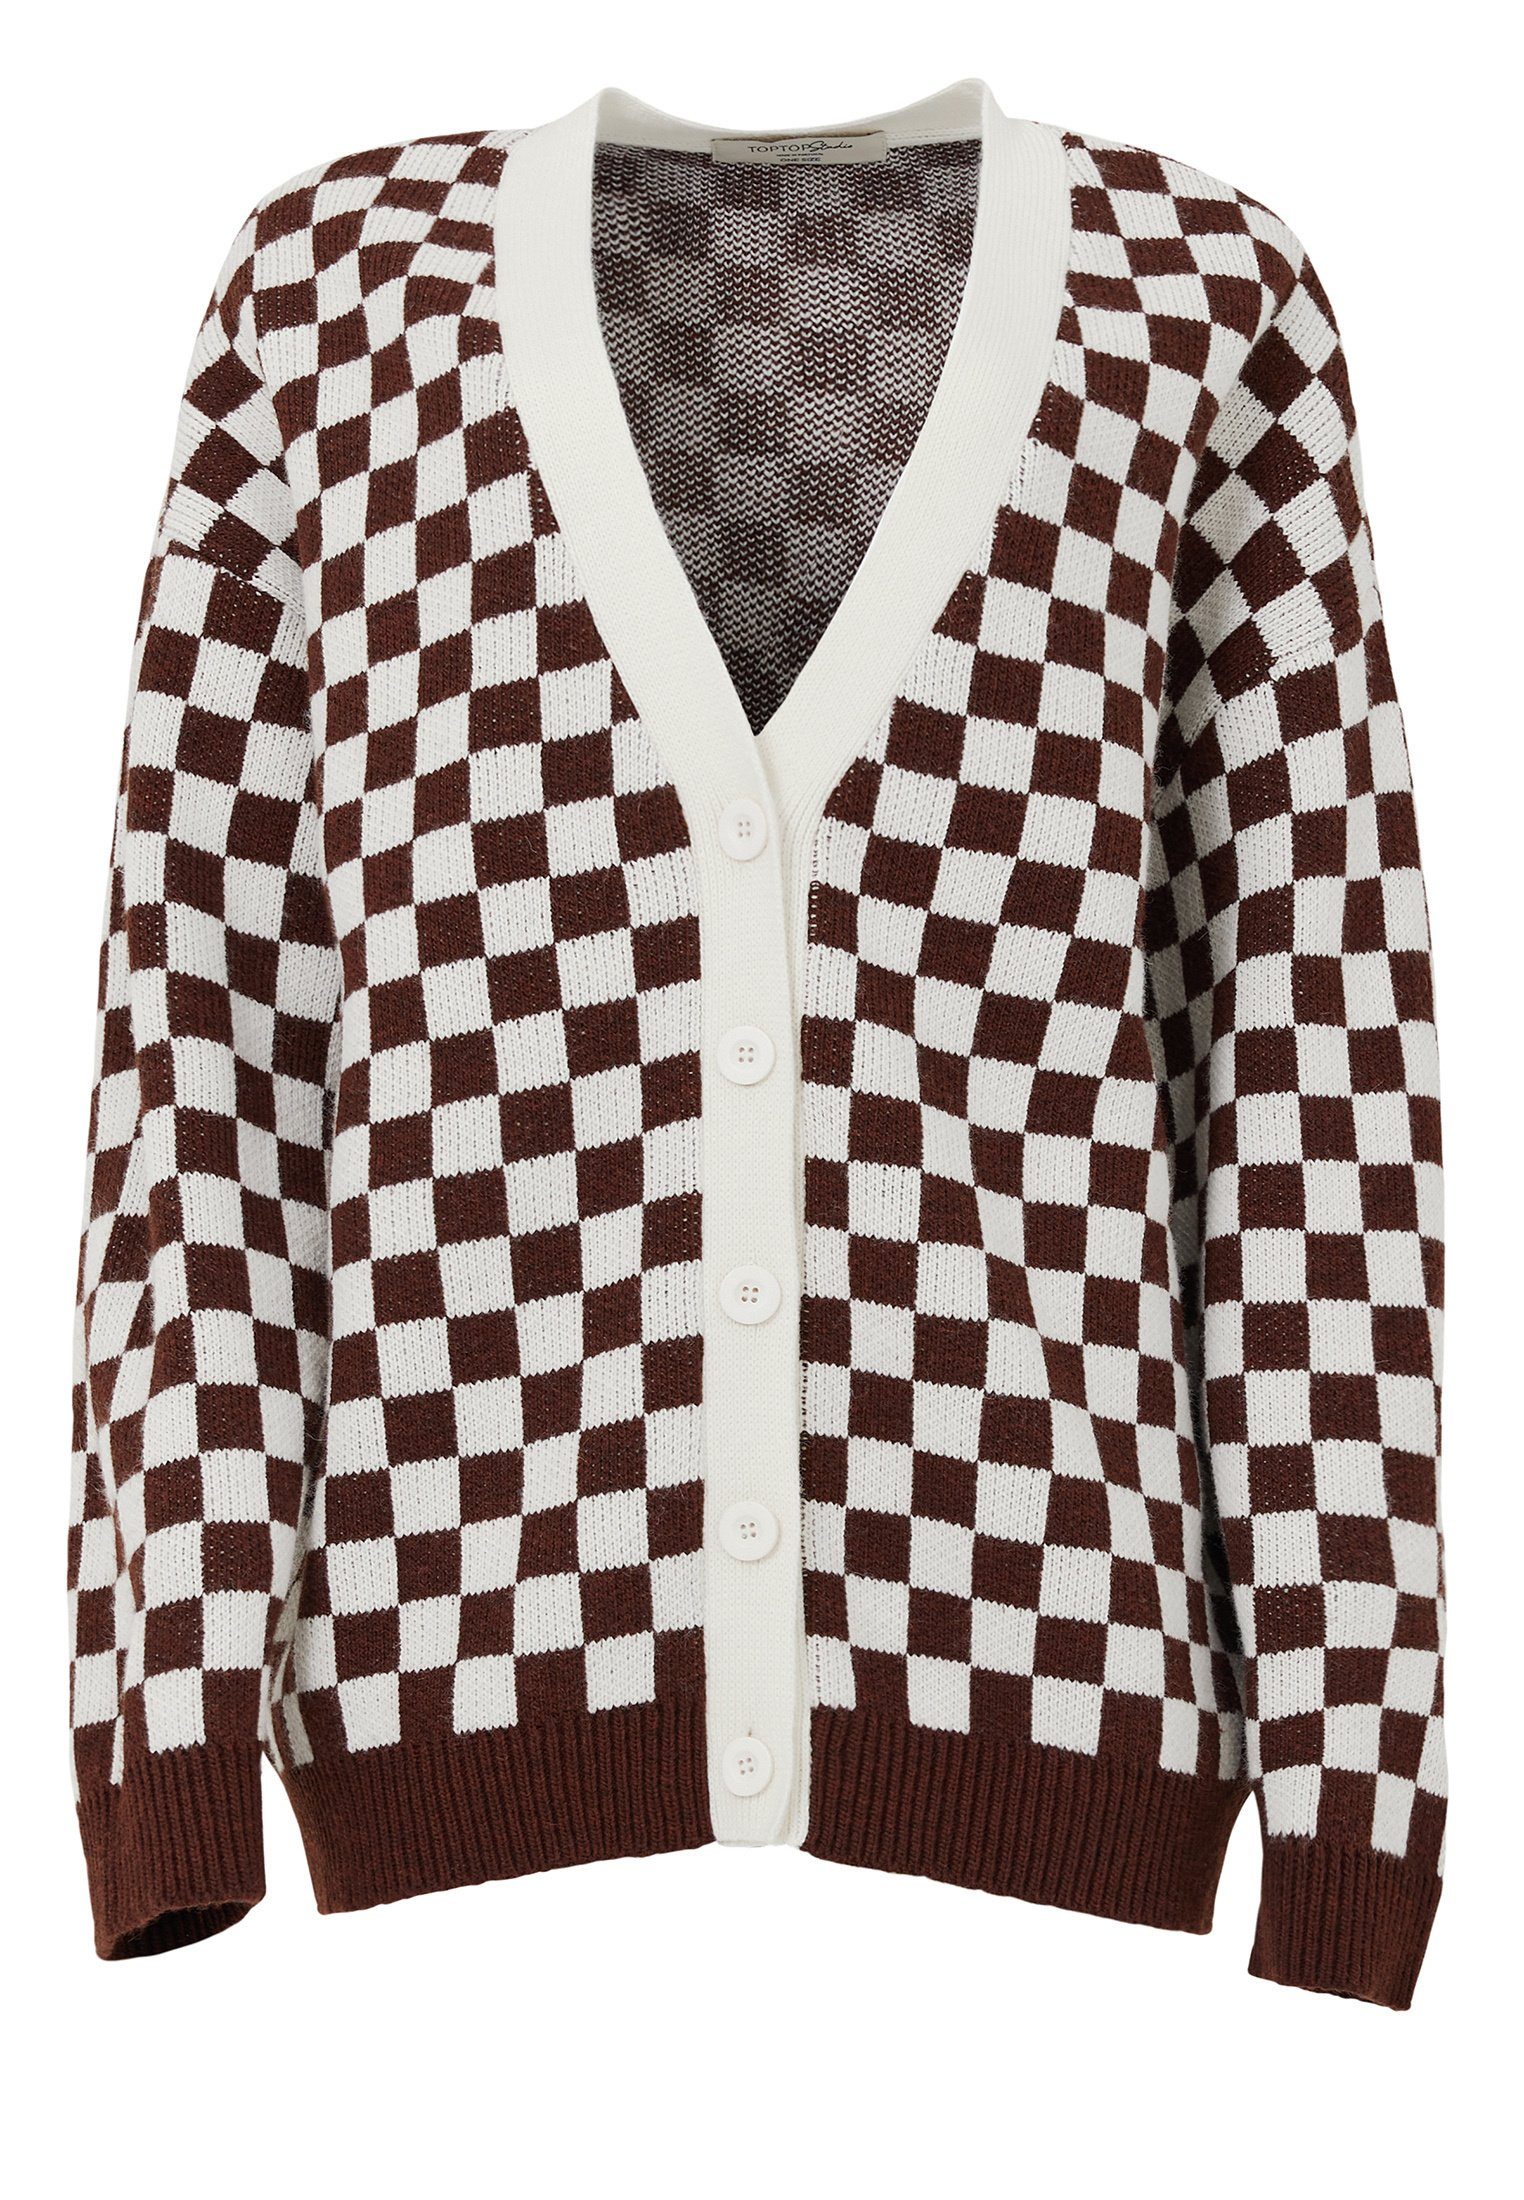 Checkered Cardigan TOPTOP cardigan STUDIO BRAUN knit